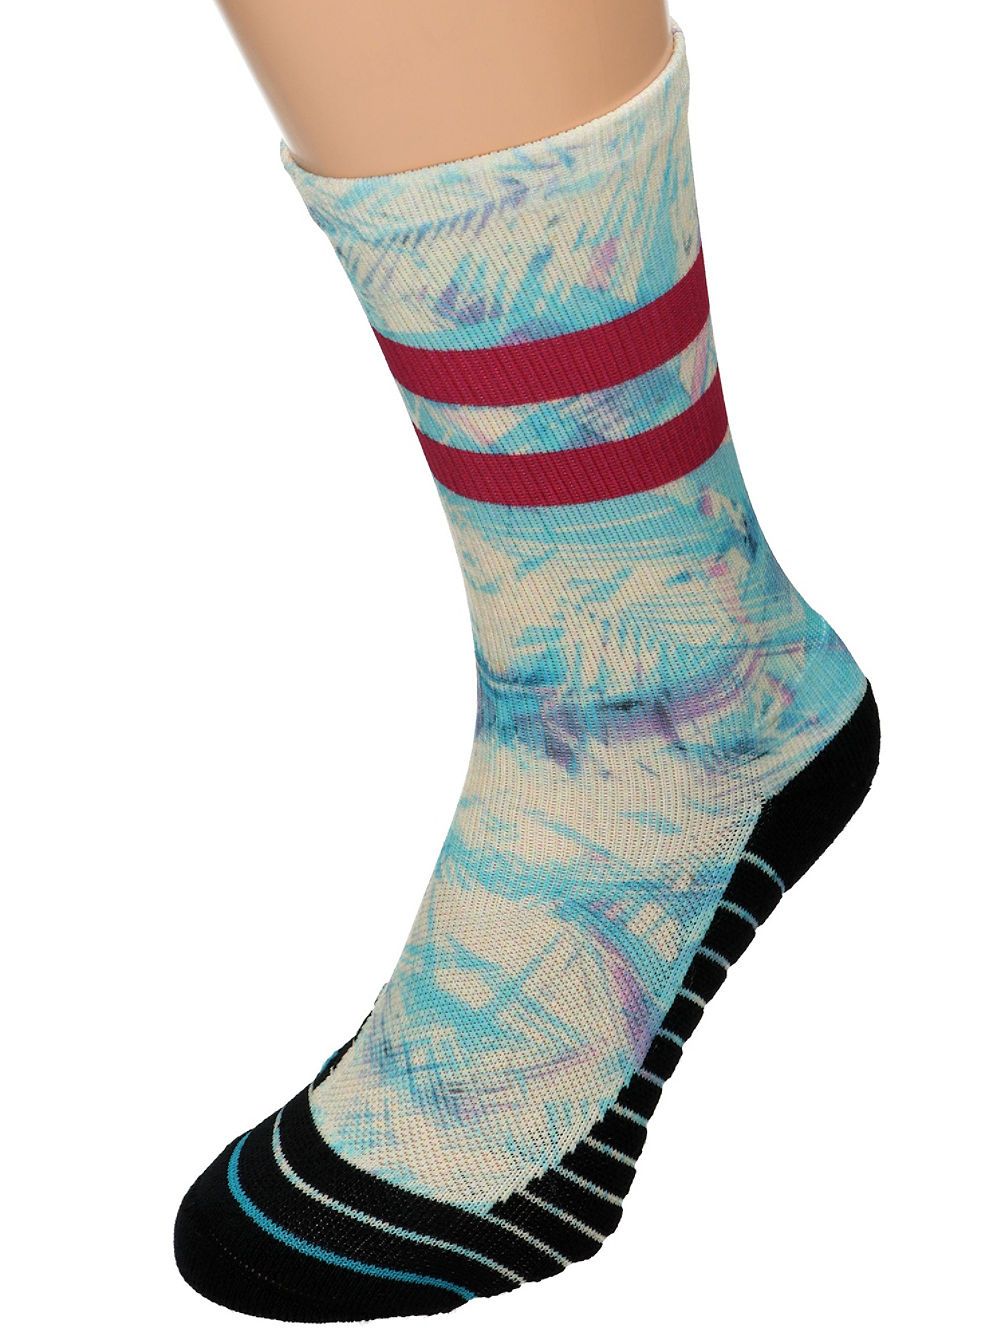 Ultraviolet Ahtletic Socks